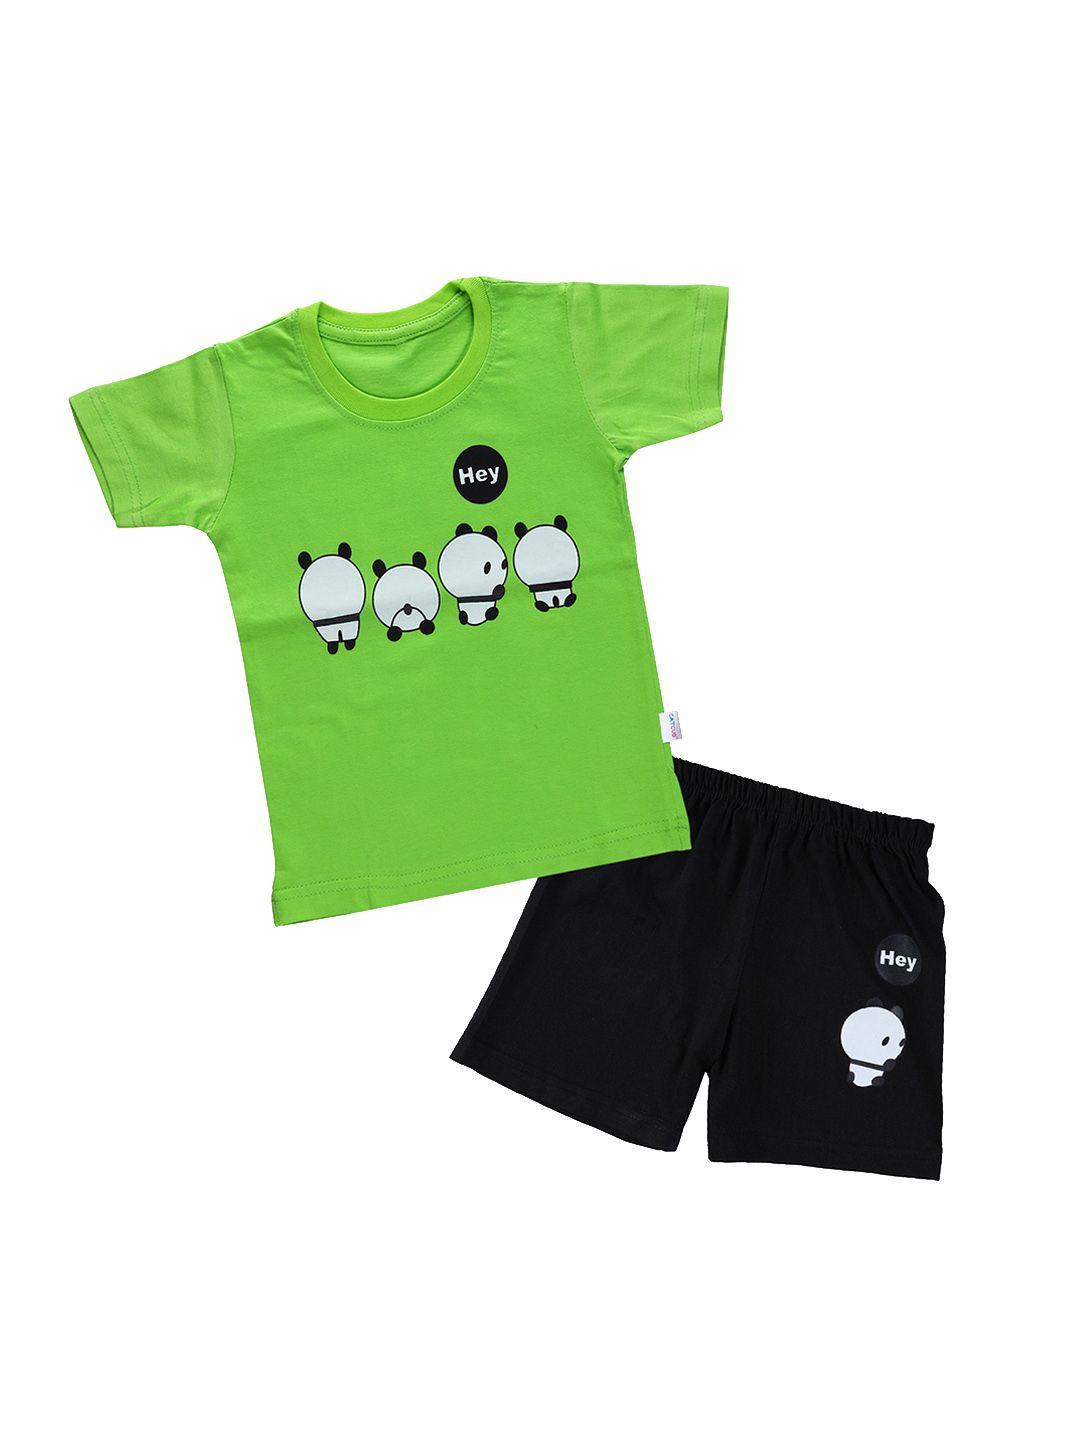 catcub-unisex-kids-green-clothing-set